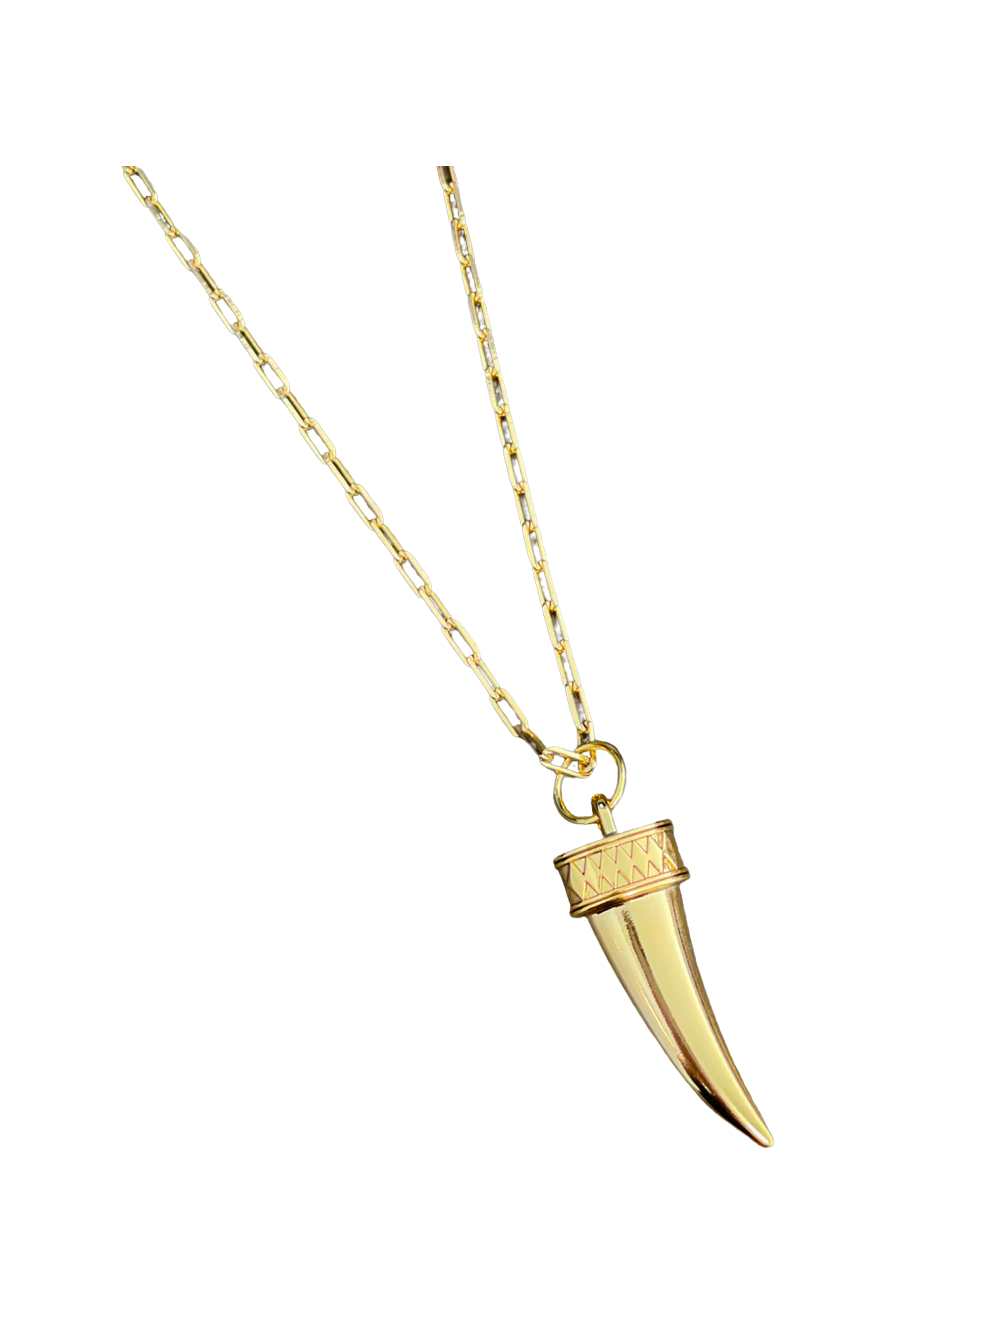 Horn Gold Filled Necklace